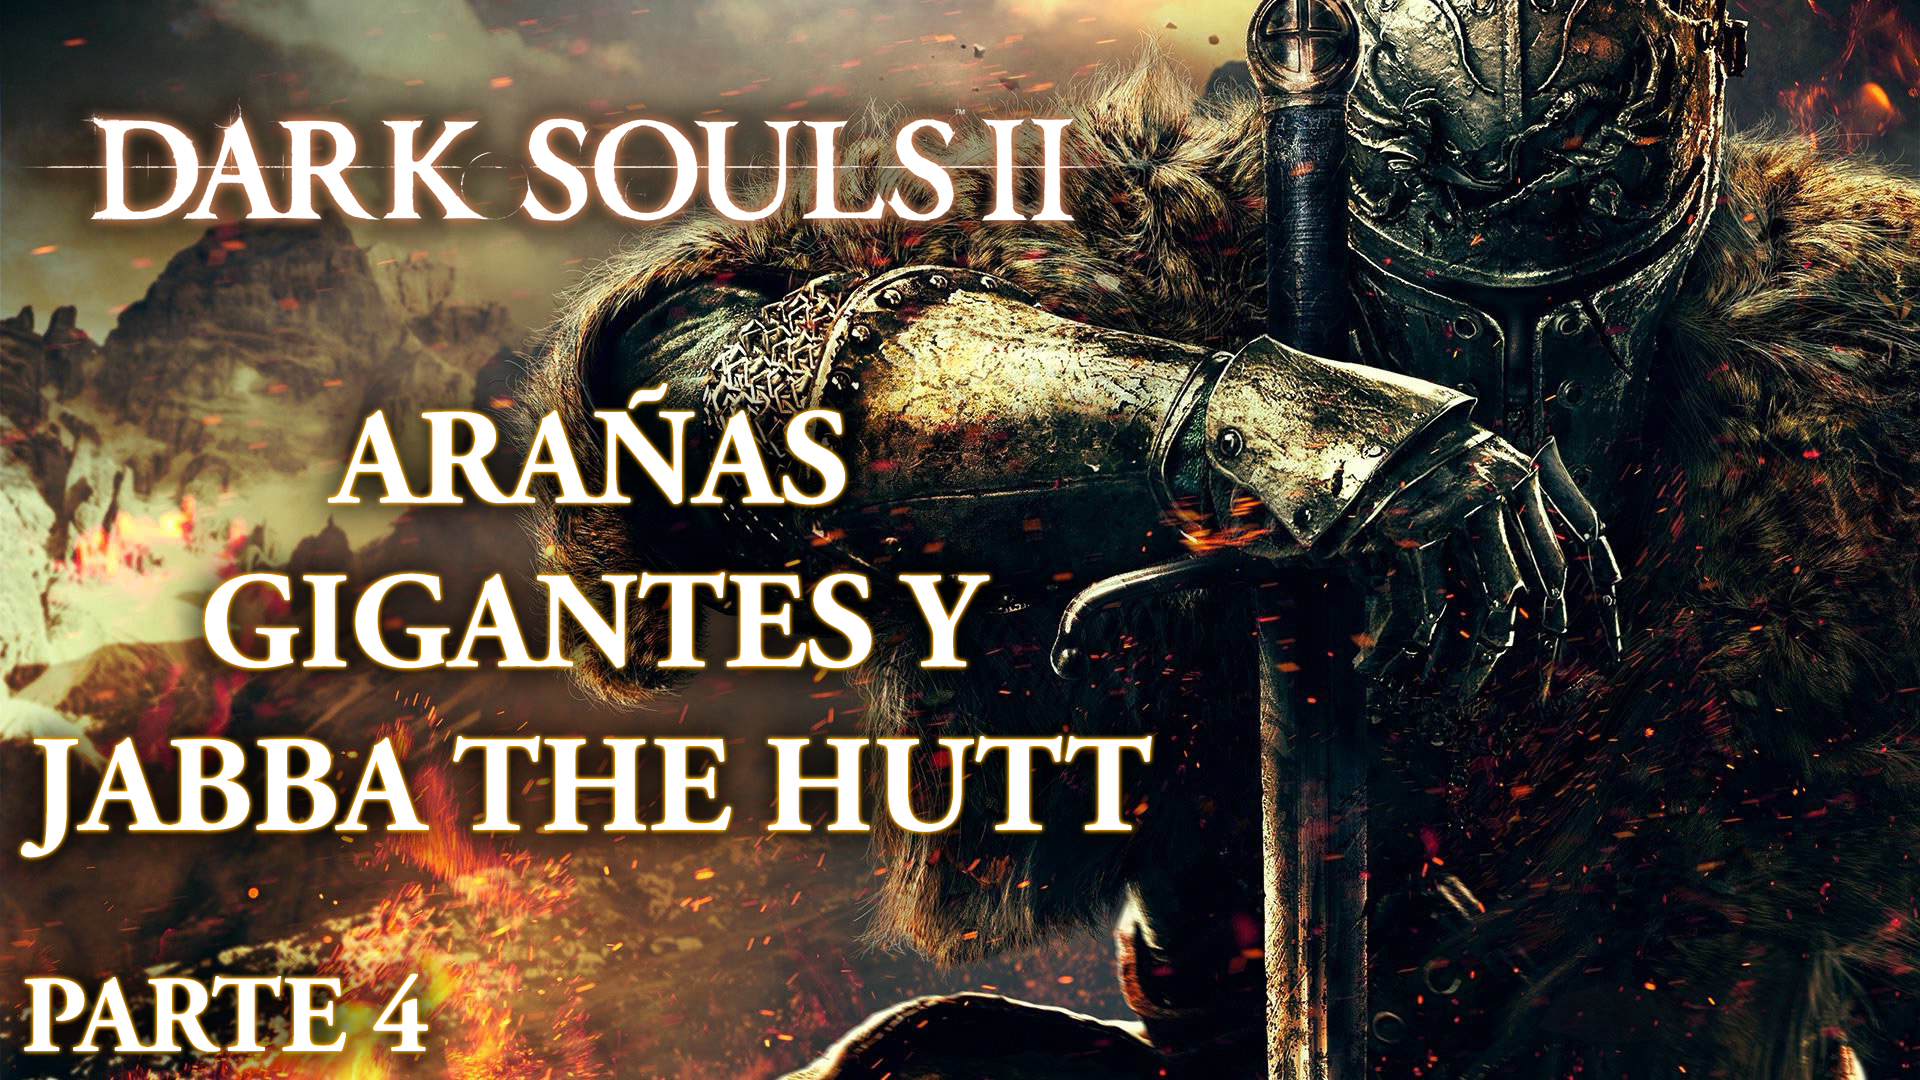 Serie Dark Souls II Parte 4: Arañas gigantes y Jabba the Hutt